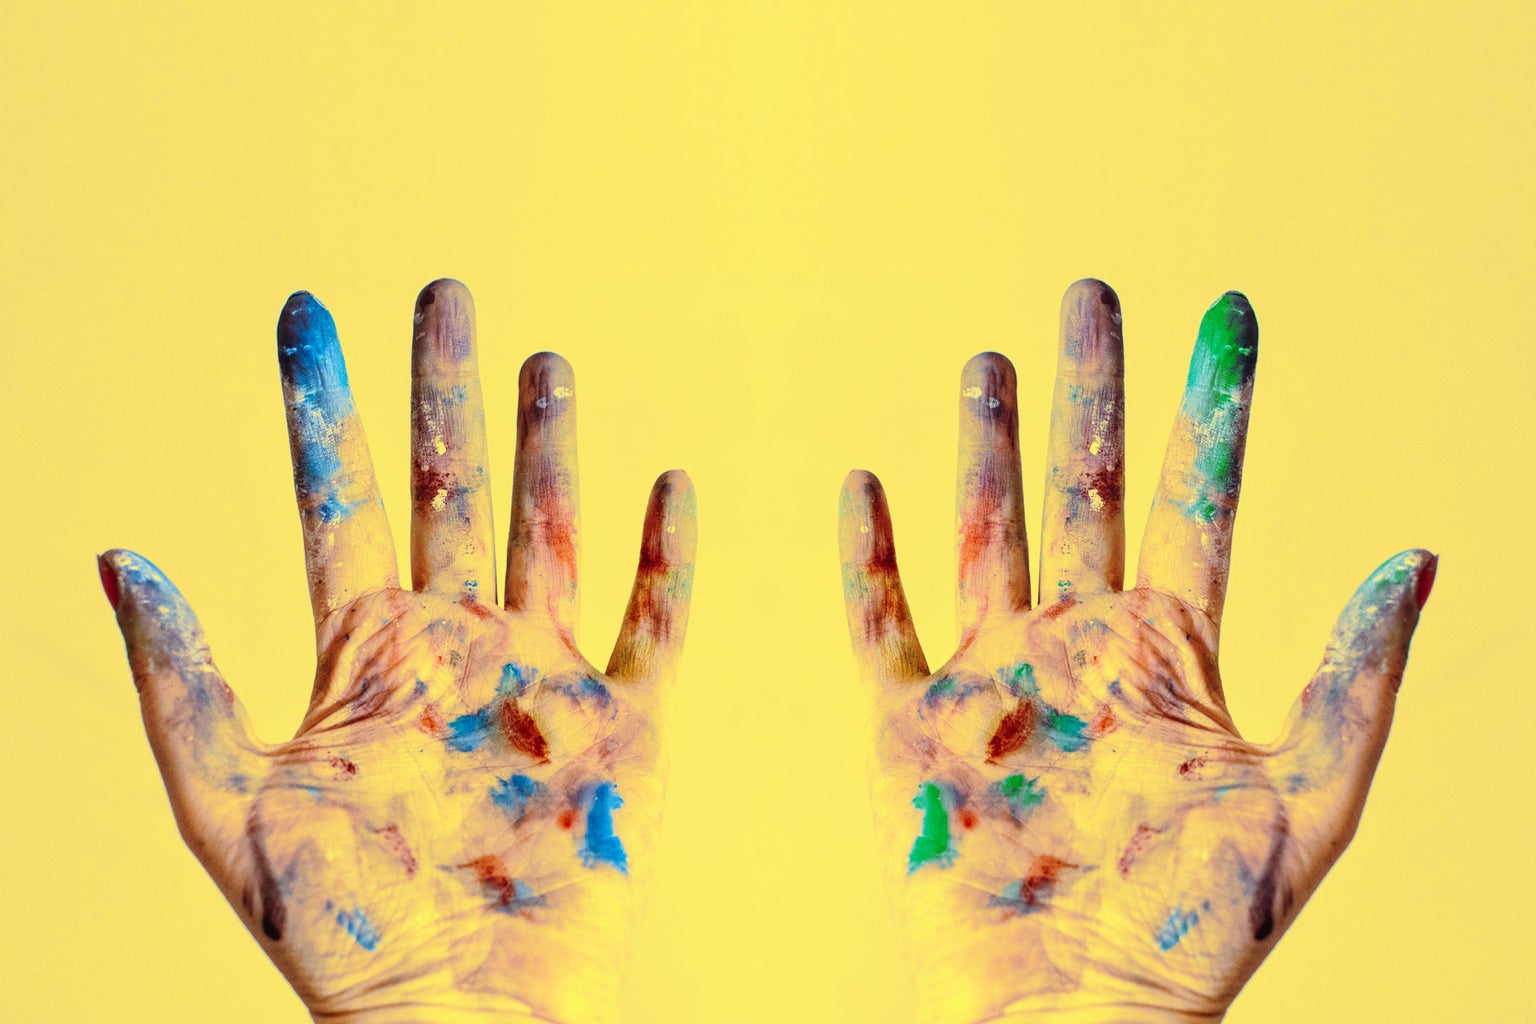 paint-splattered gloves against yellow background